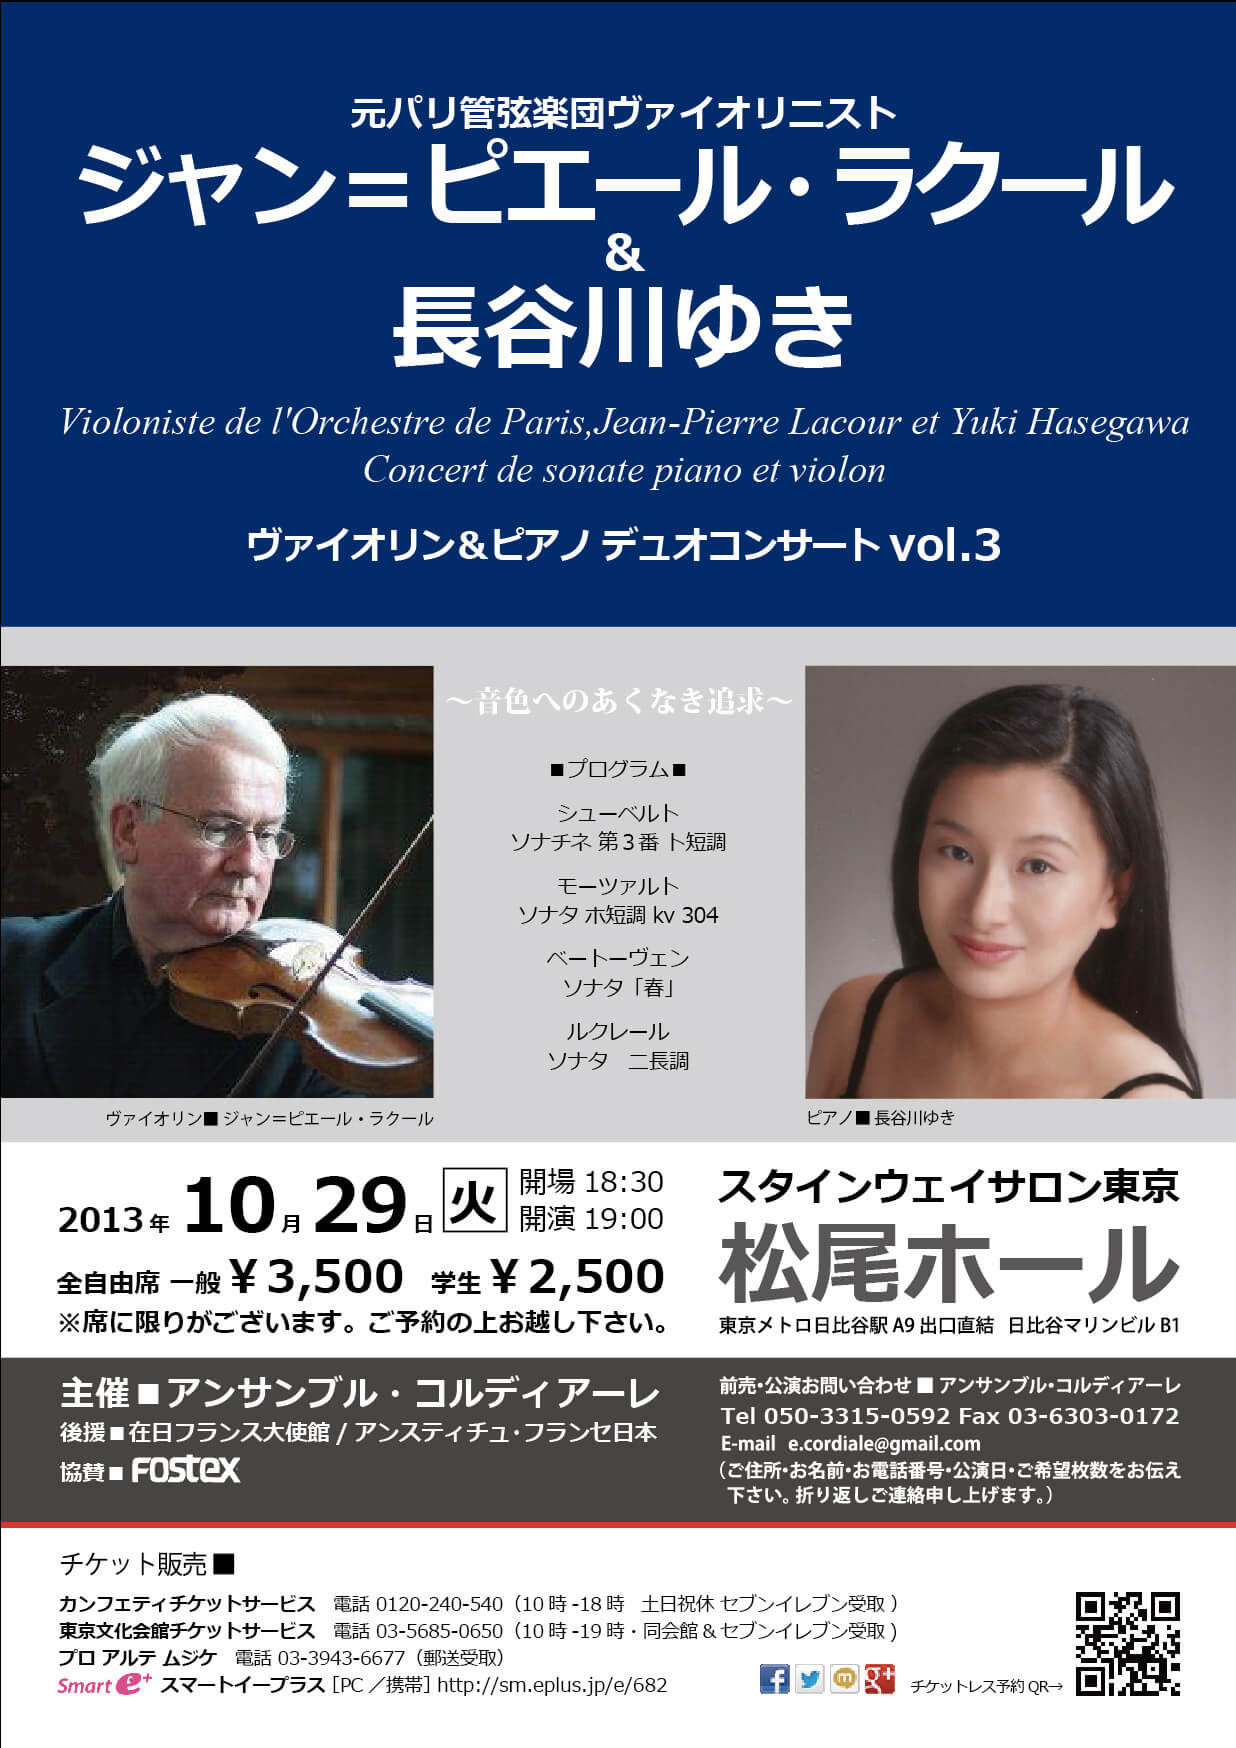 Former Paris Orchestra Violin Jean-Pierre Lacourt / Yuki Hasegawa